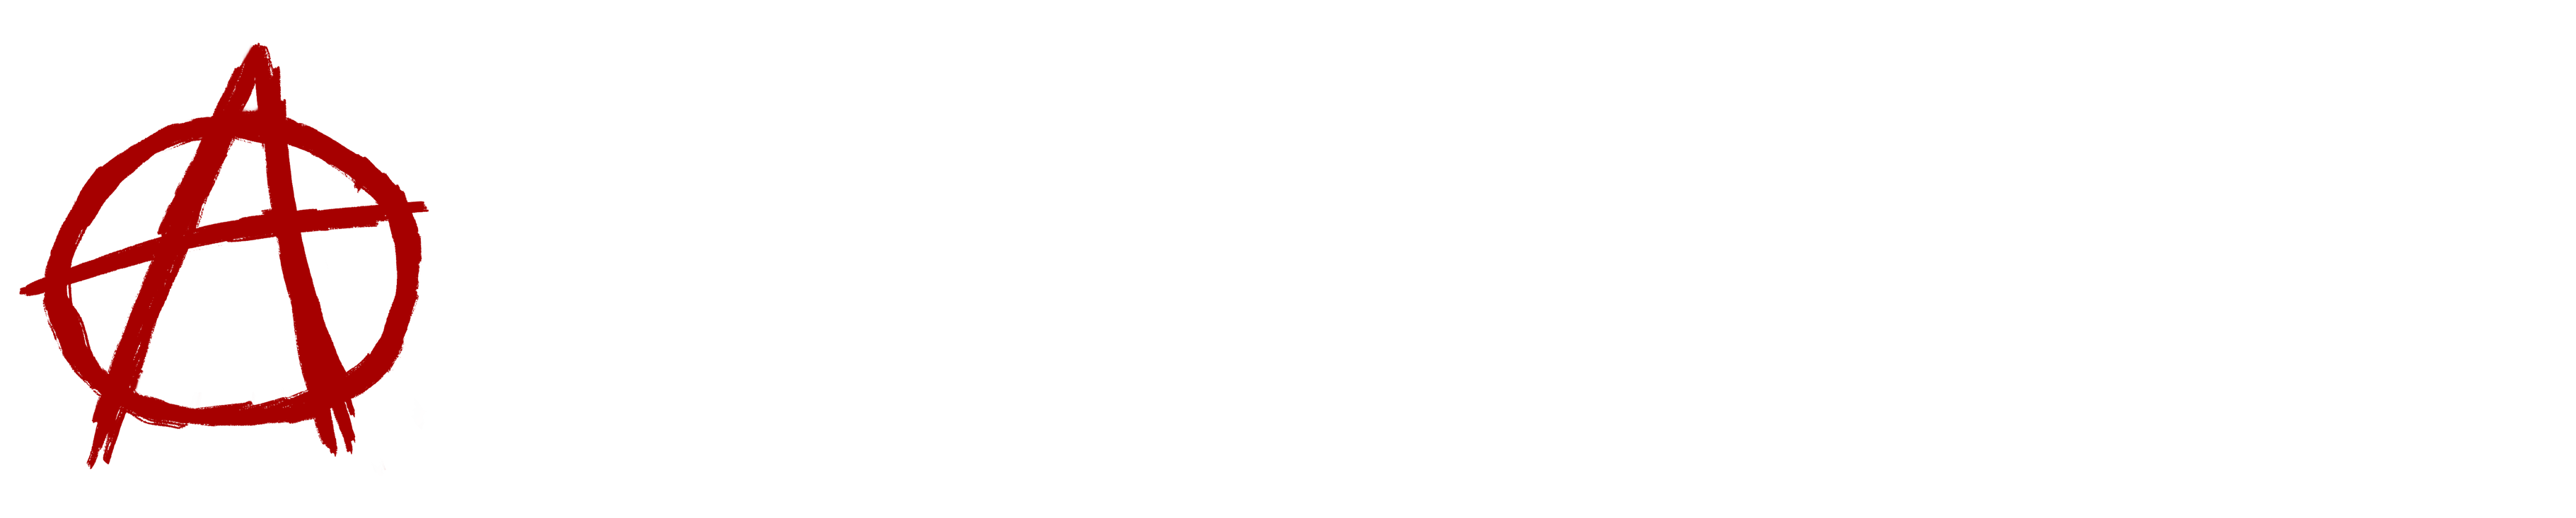 The Ars Longa Initiative